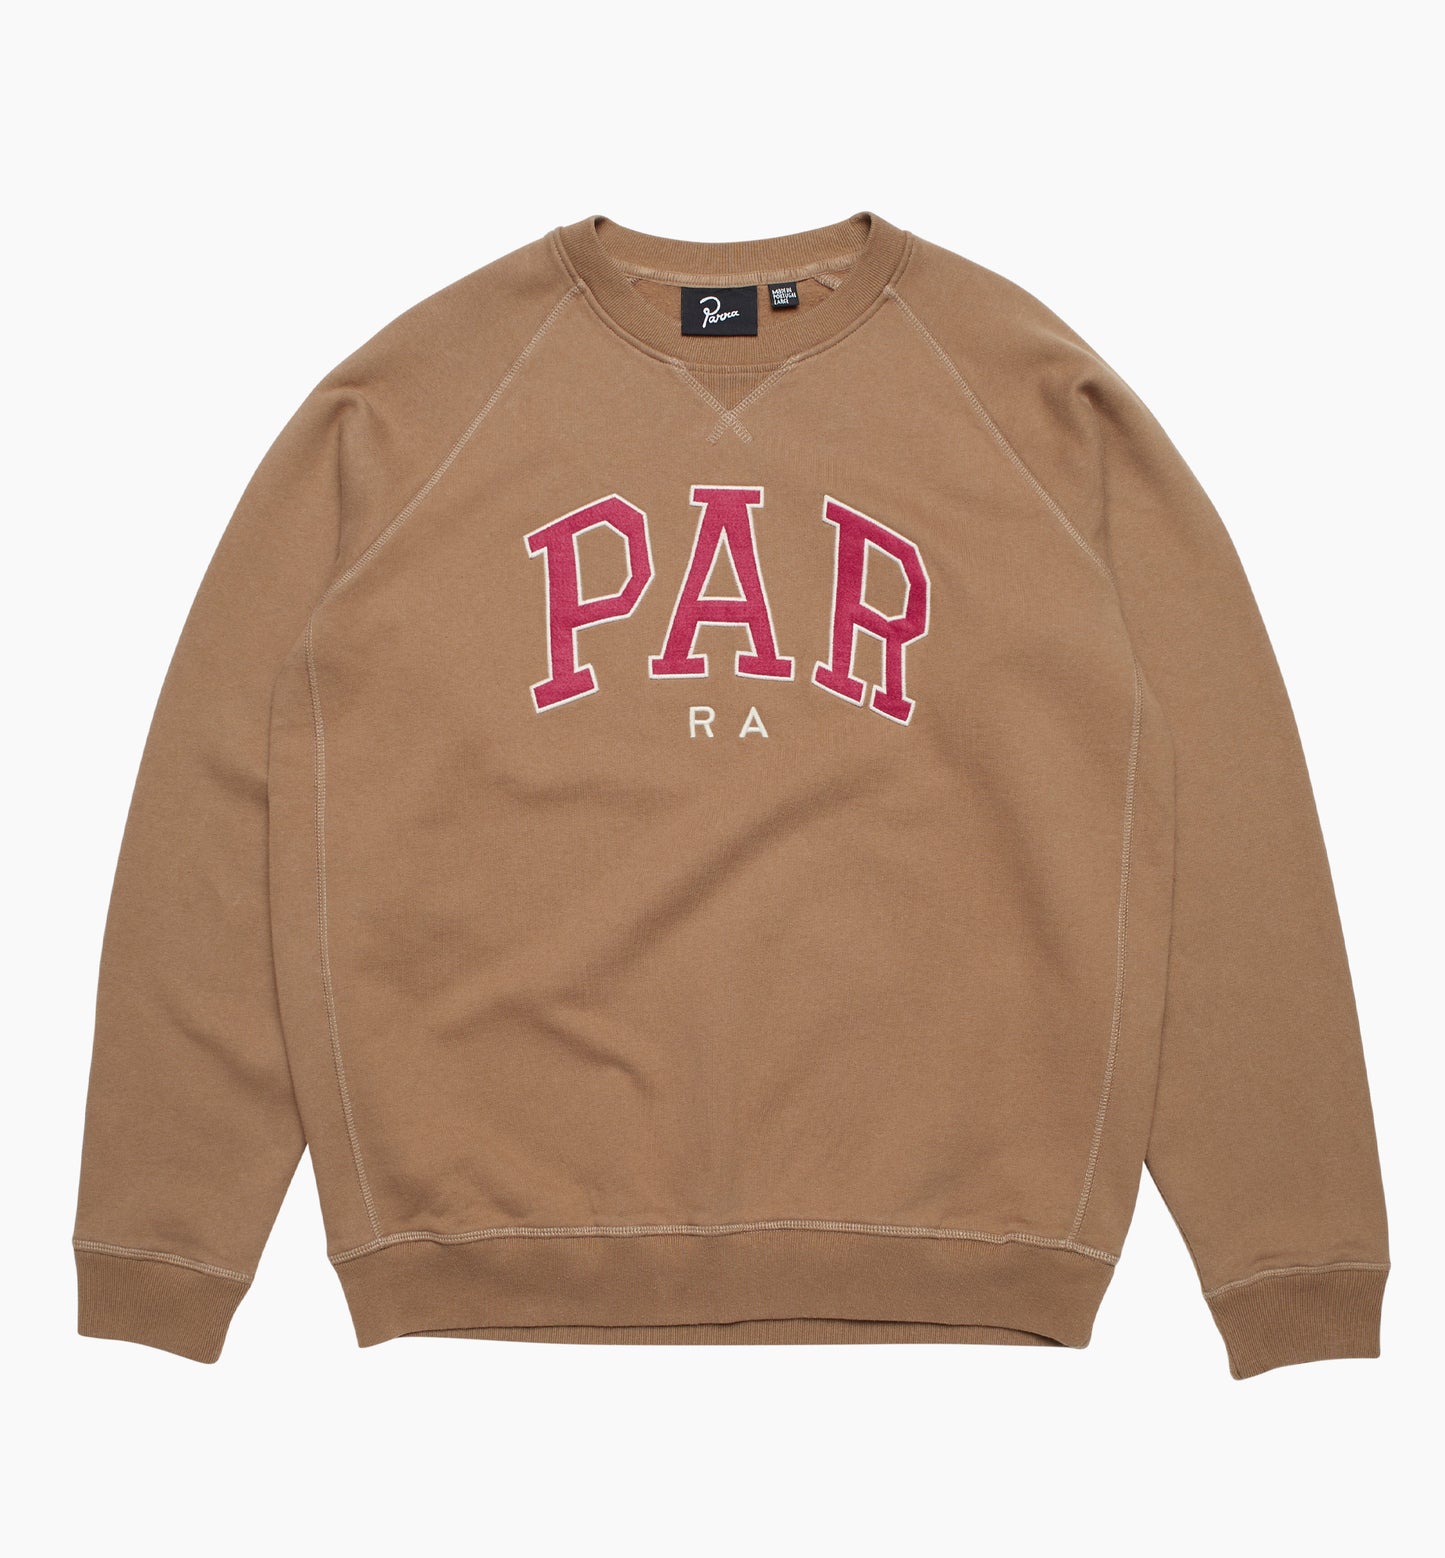 By Parra Educational Crewneck Sweater Shitake